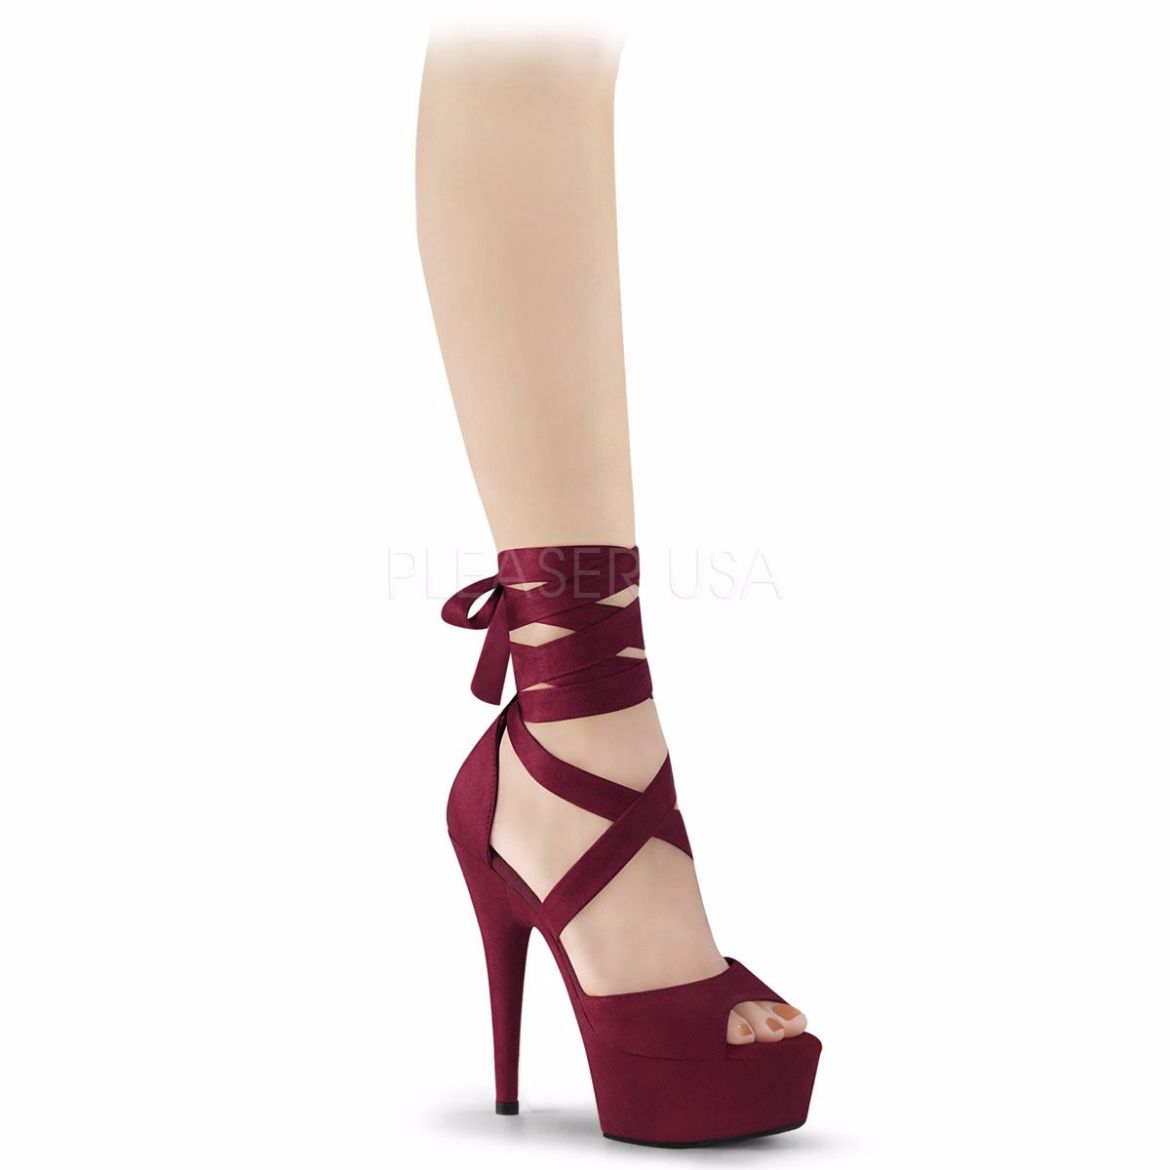 Product image of Pleaser DELIGHT-679 Burgundy Faux Suede/Burgundy Faux Suede 6 inch (15.2 cm) Heel 1 3/4 inch (4.5 cm) Platform Criss Cross Ankle Wrap Sandal Shoes